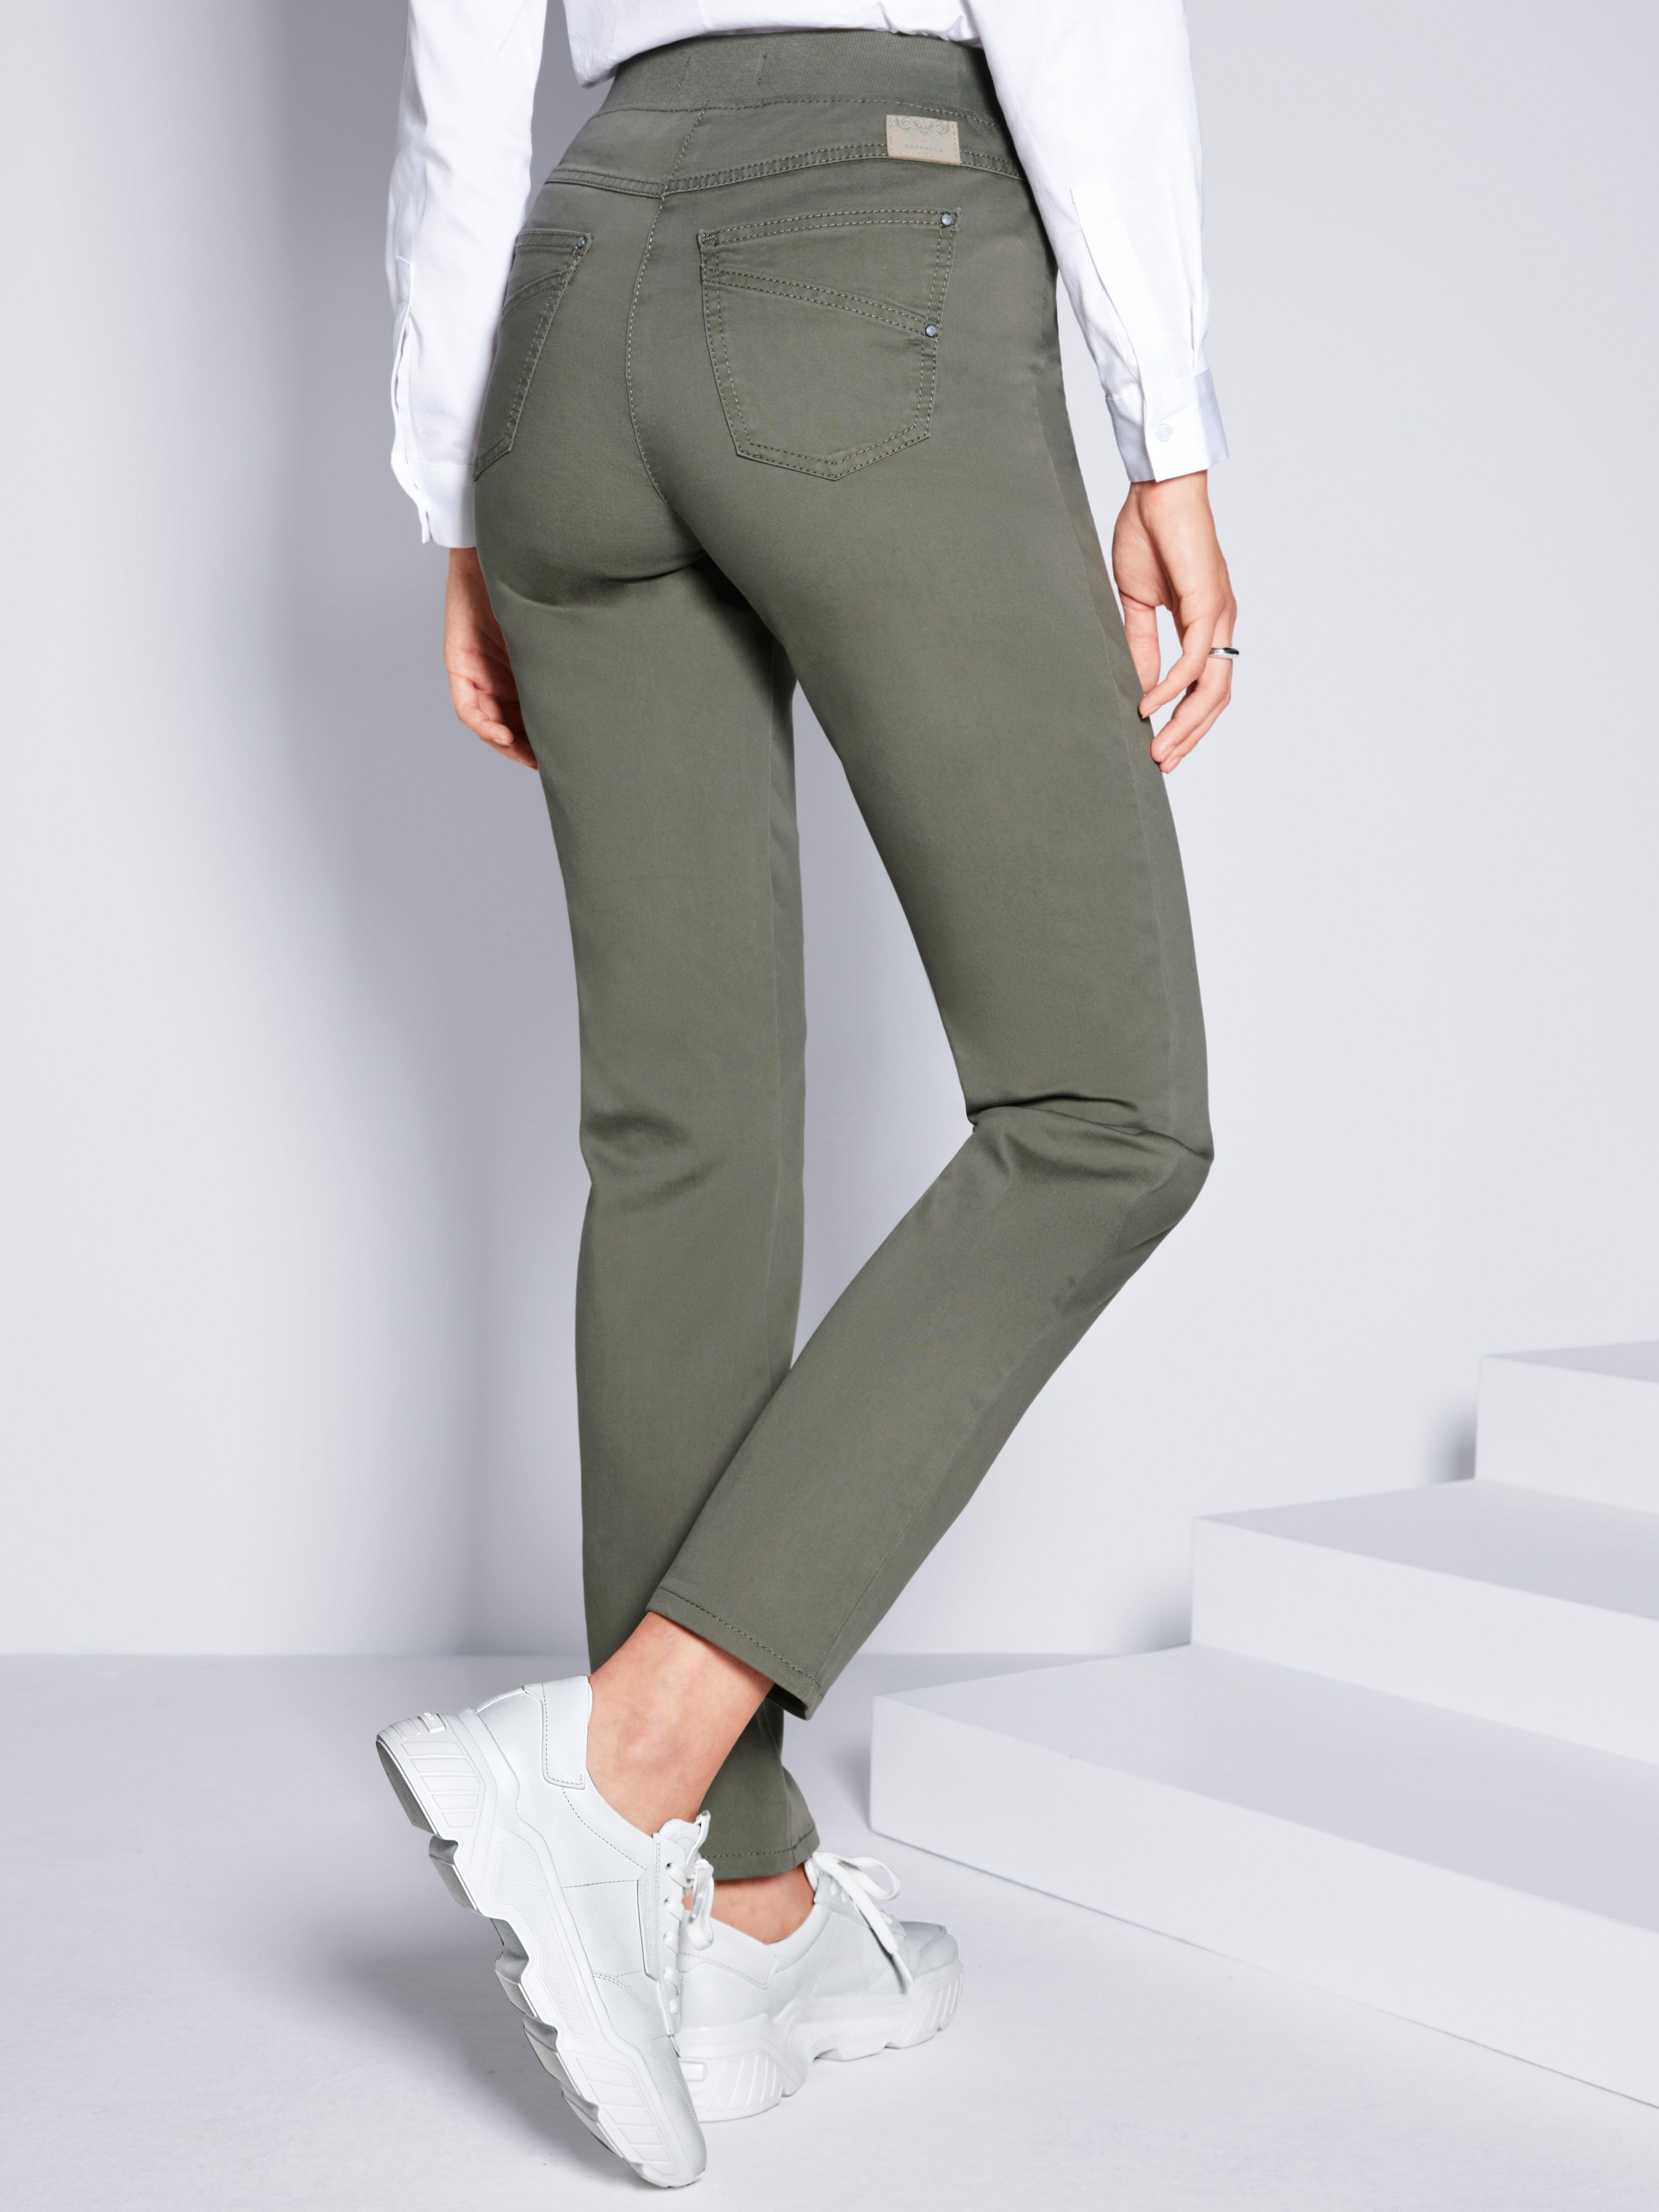 Raphaela by Brax - ProForm slim-jeans model Pamina